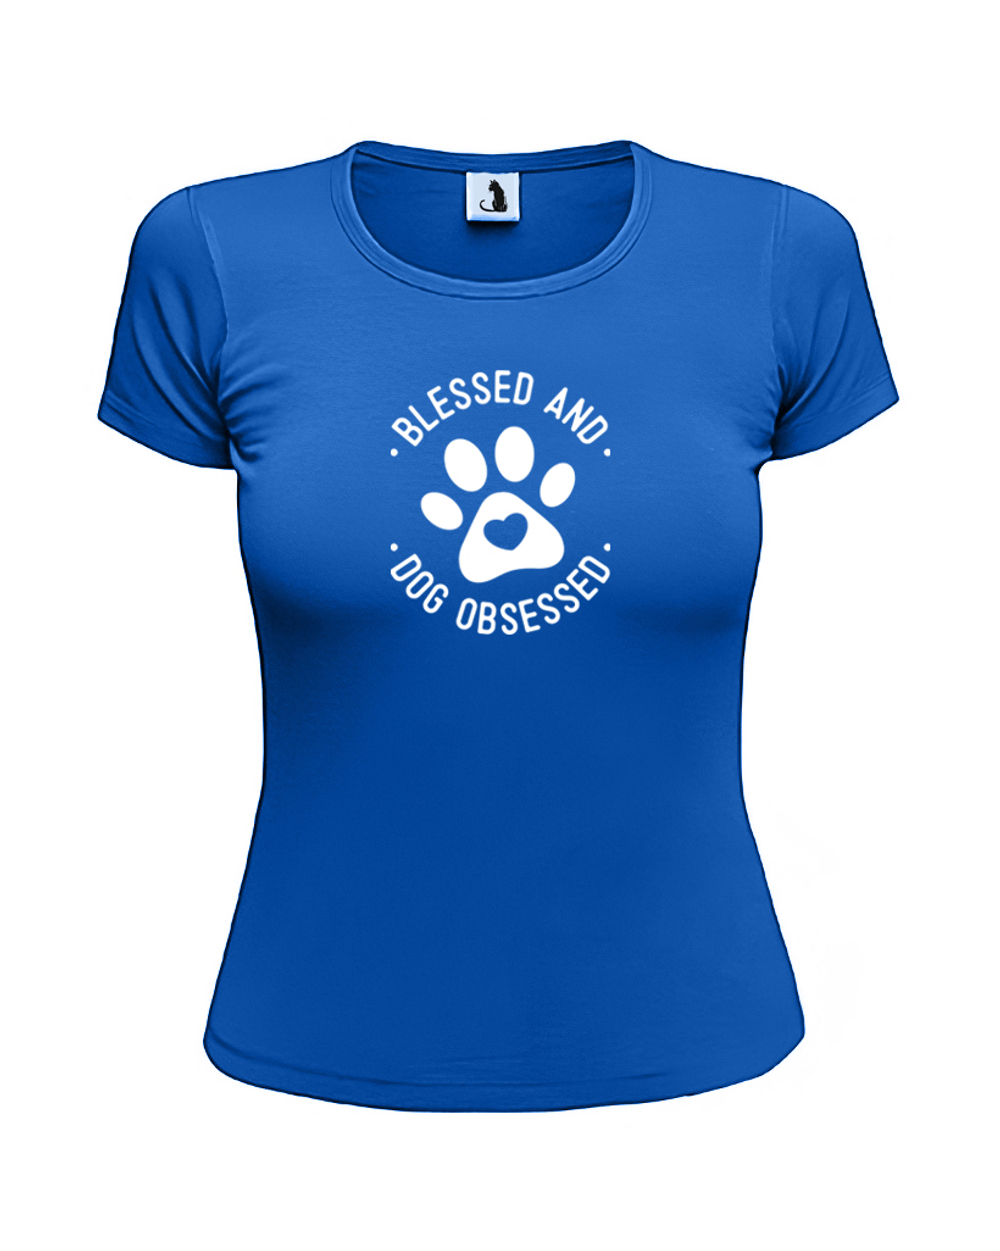 Футболка Blessed and dog obsessed женская приталенная синяя с белым рисунком